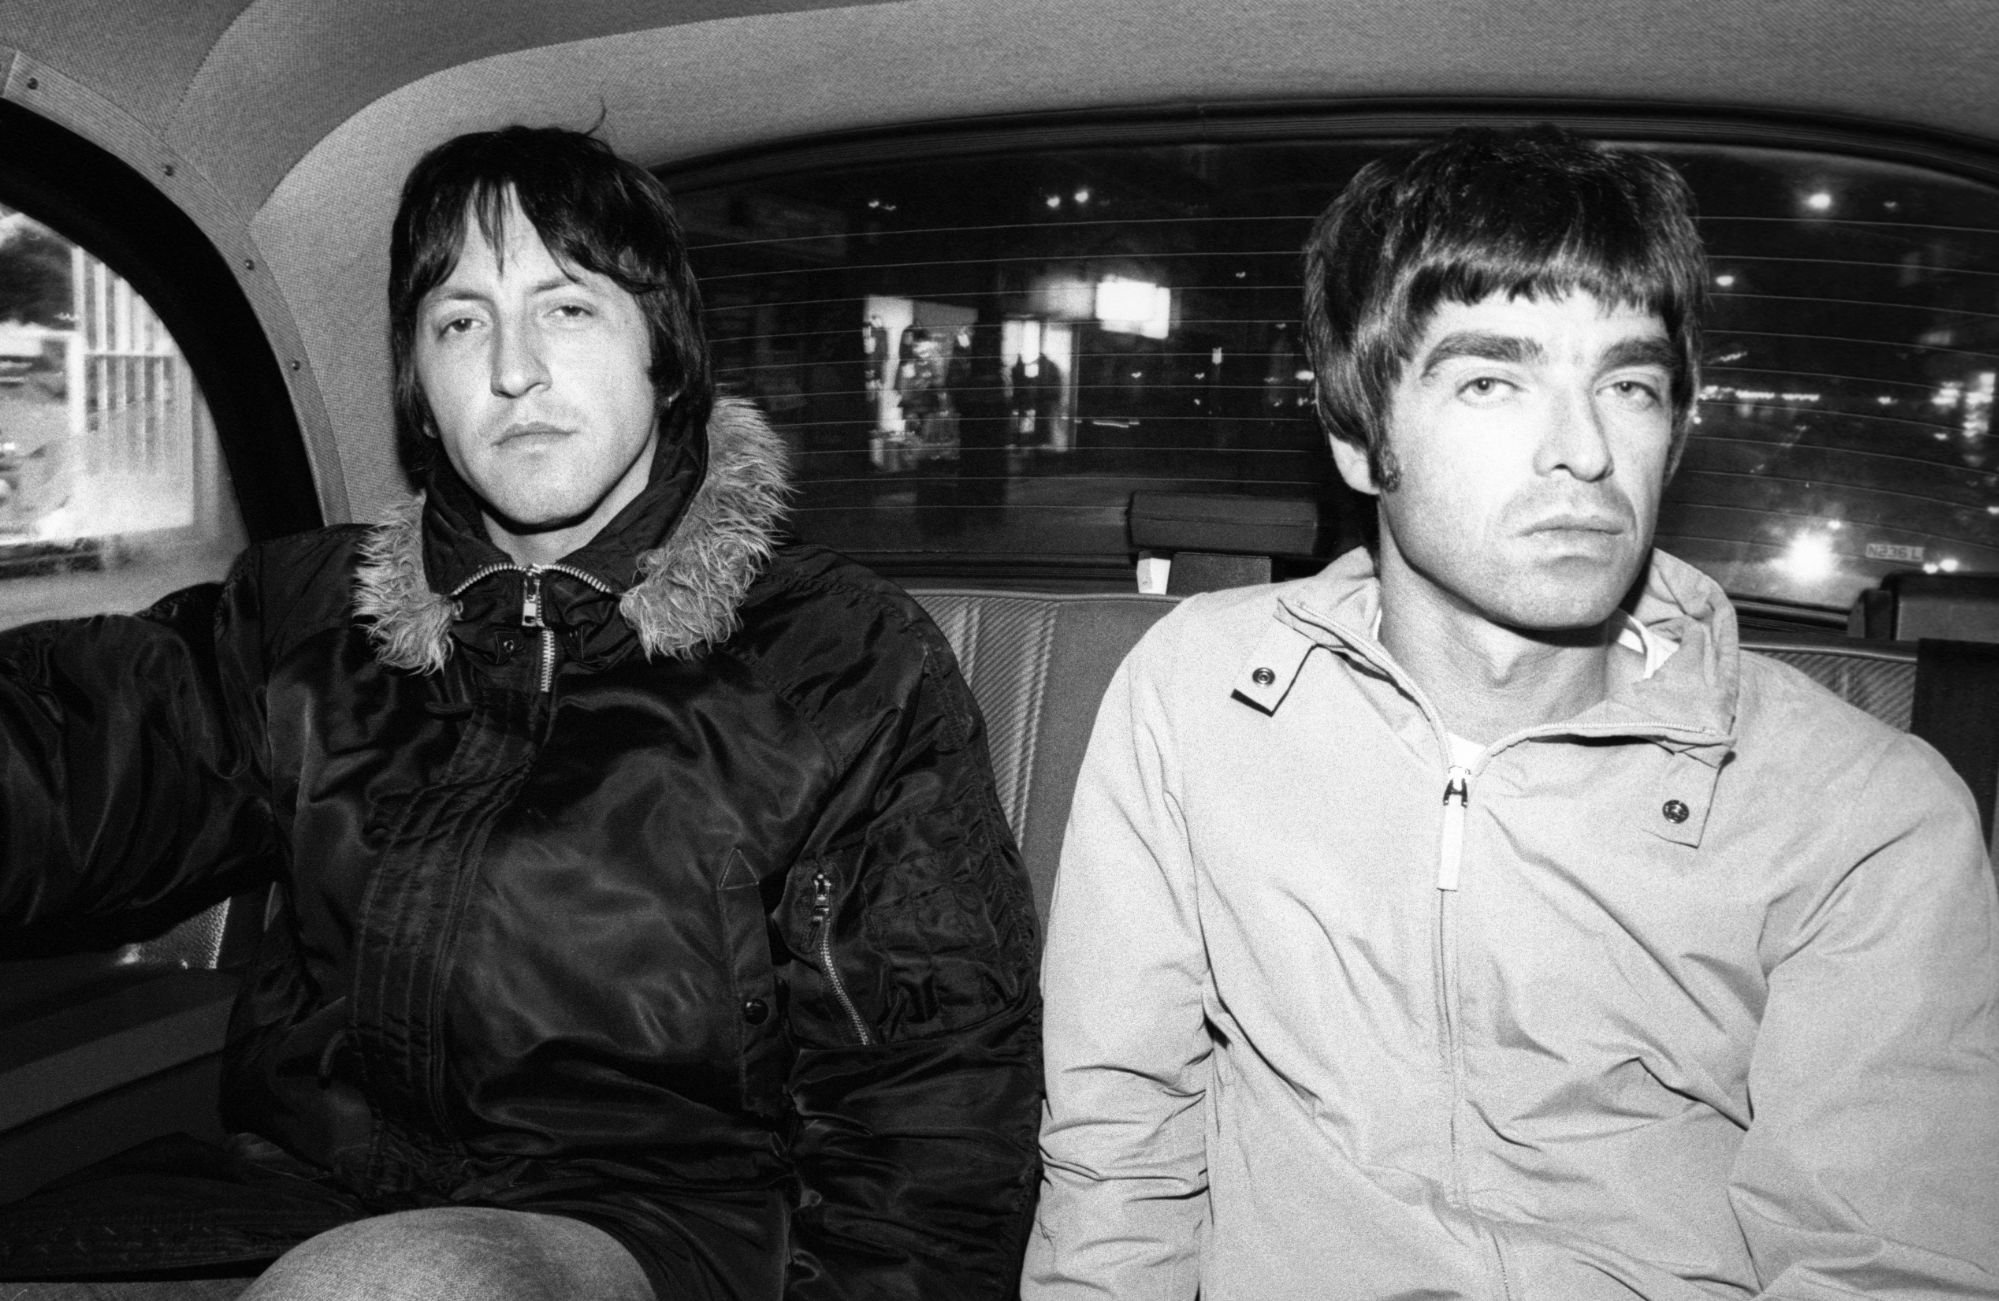 Gem Archer and Noel Gallagher / Oasis